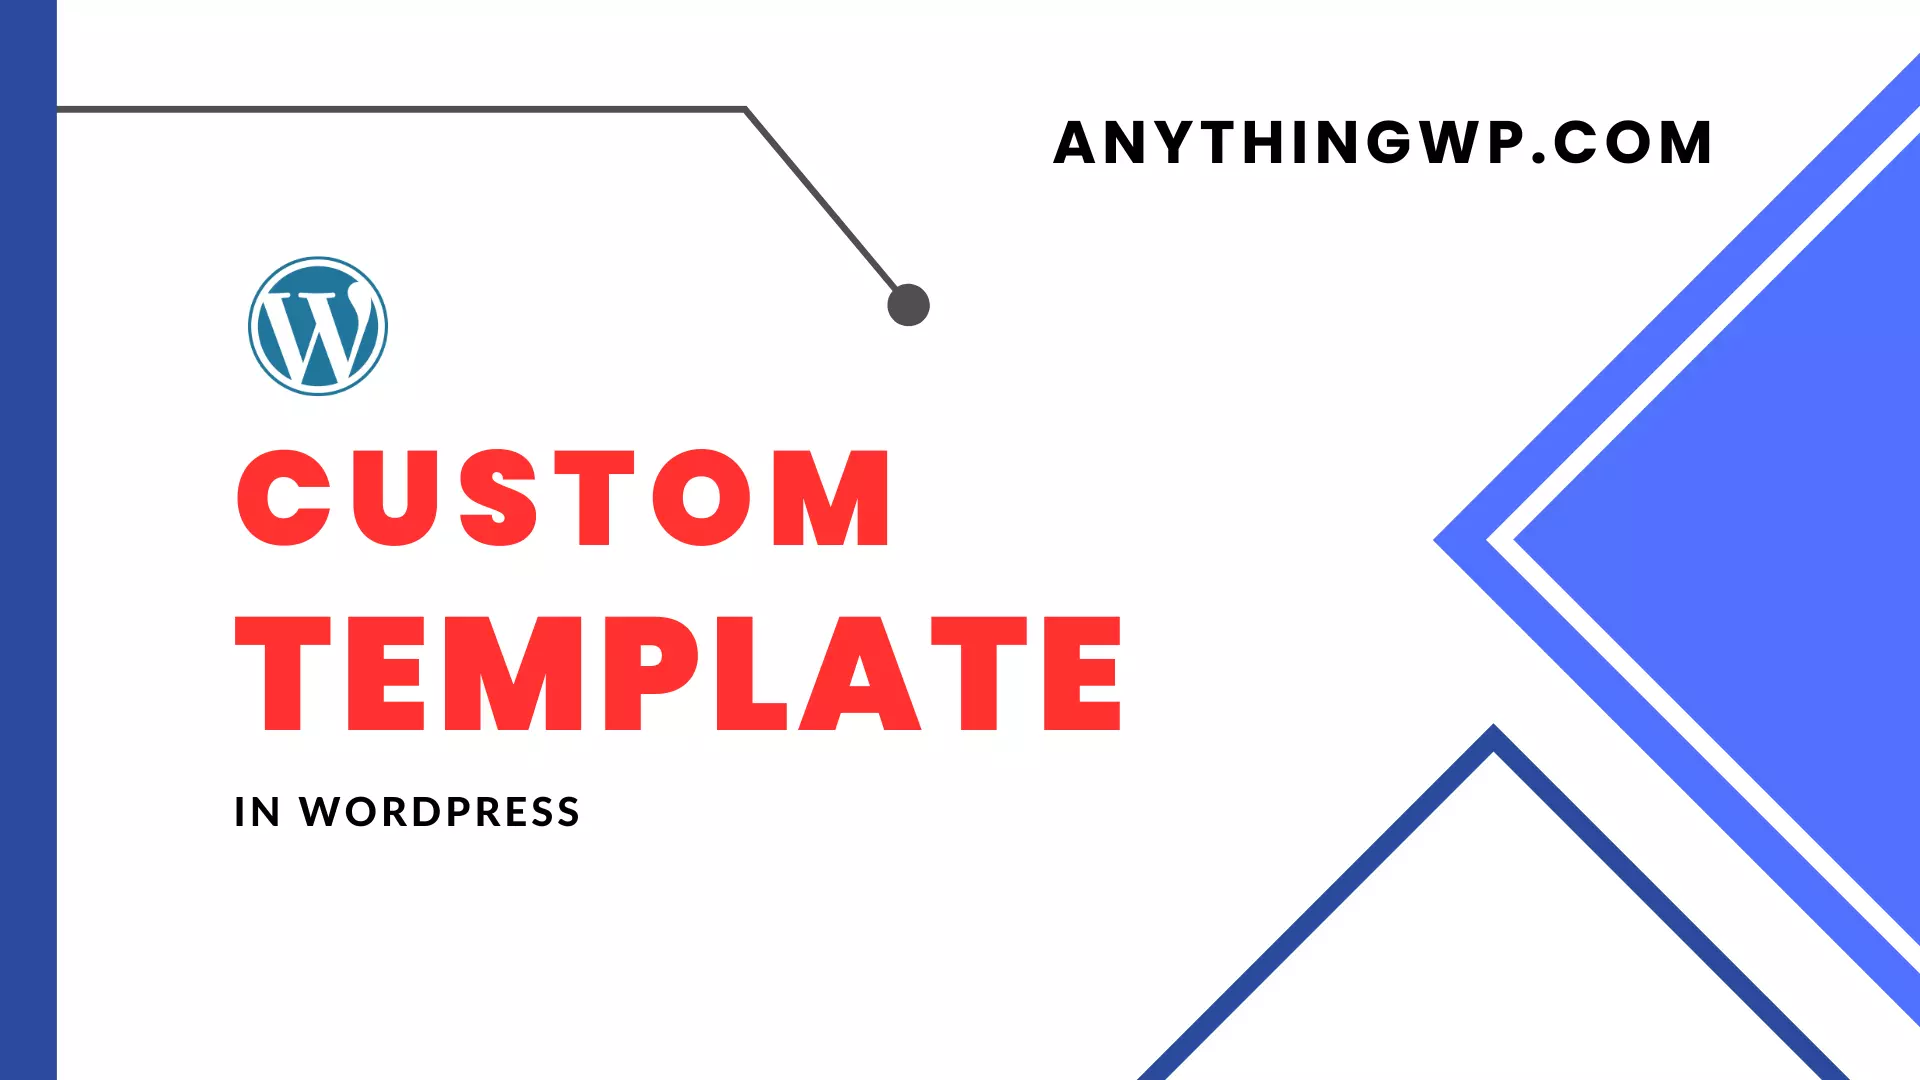 custom-template-in-wordpress-anythingwp